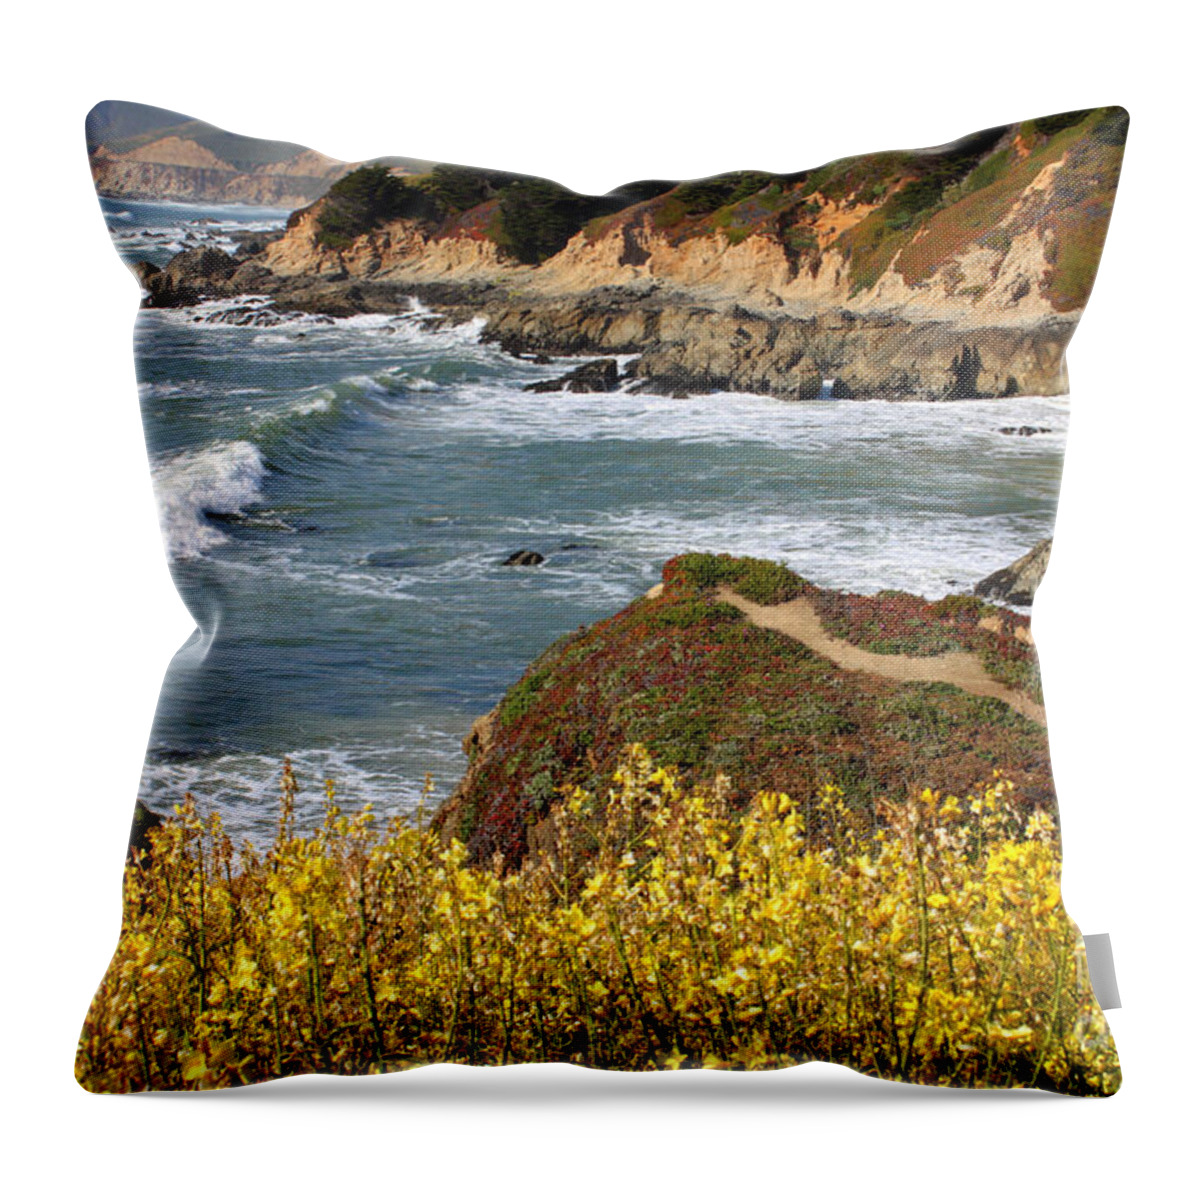 California Throw Pillow featuring the photograph California Coast Overlook by Carol Groenen